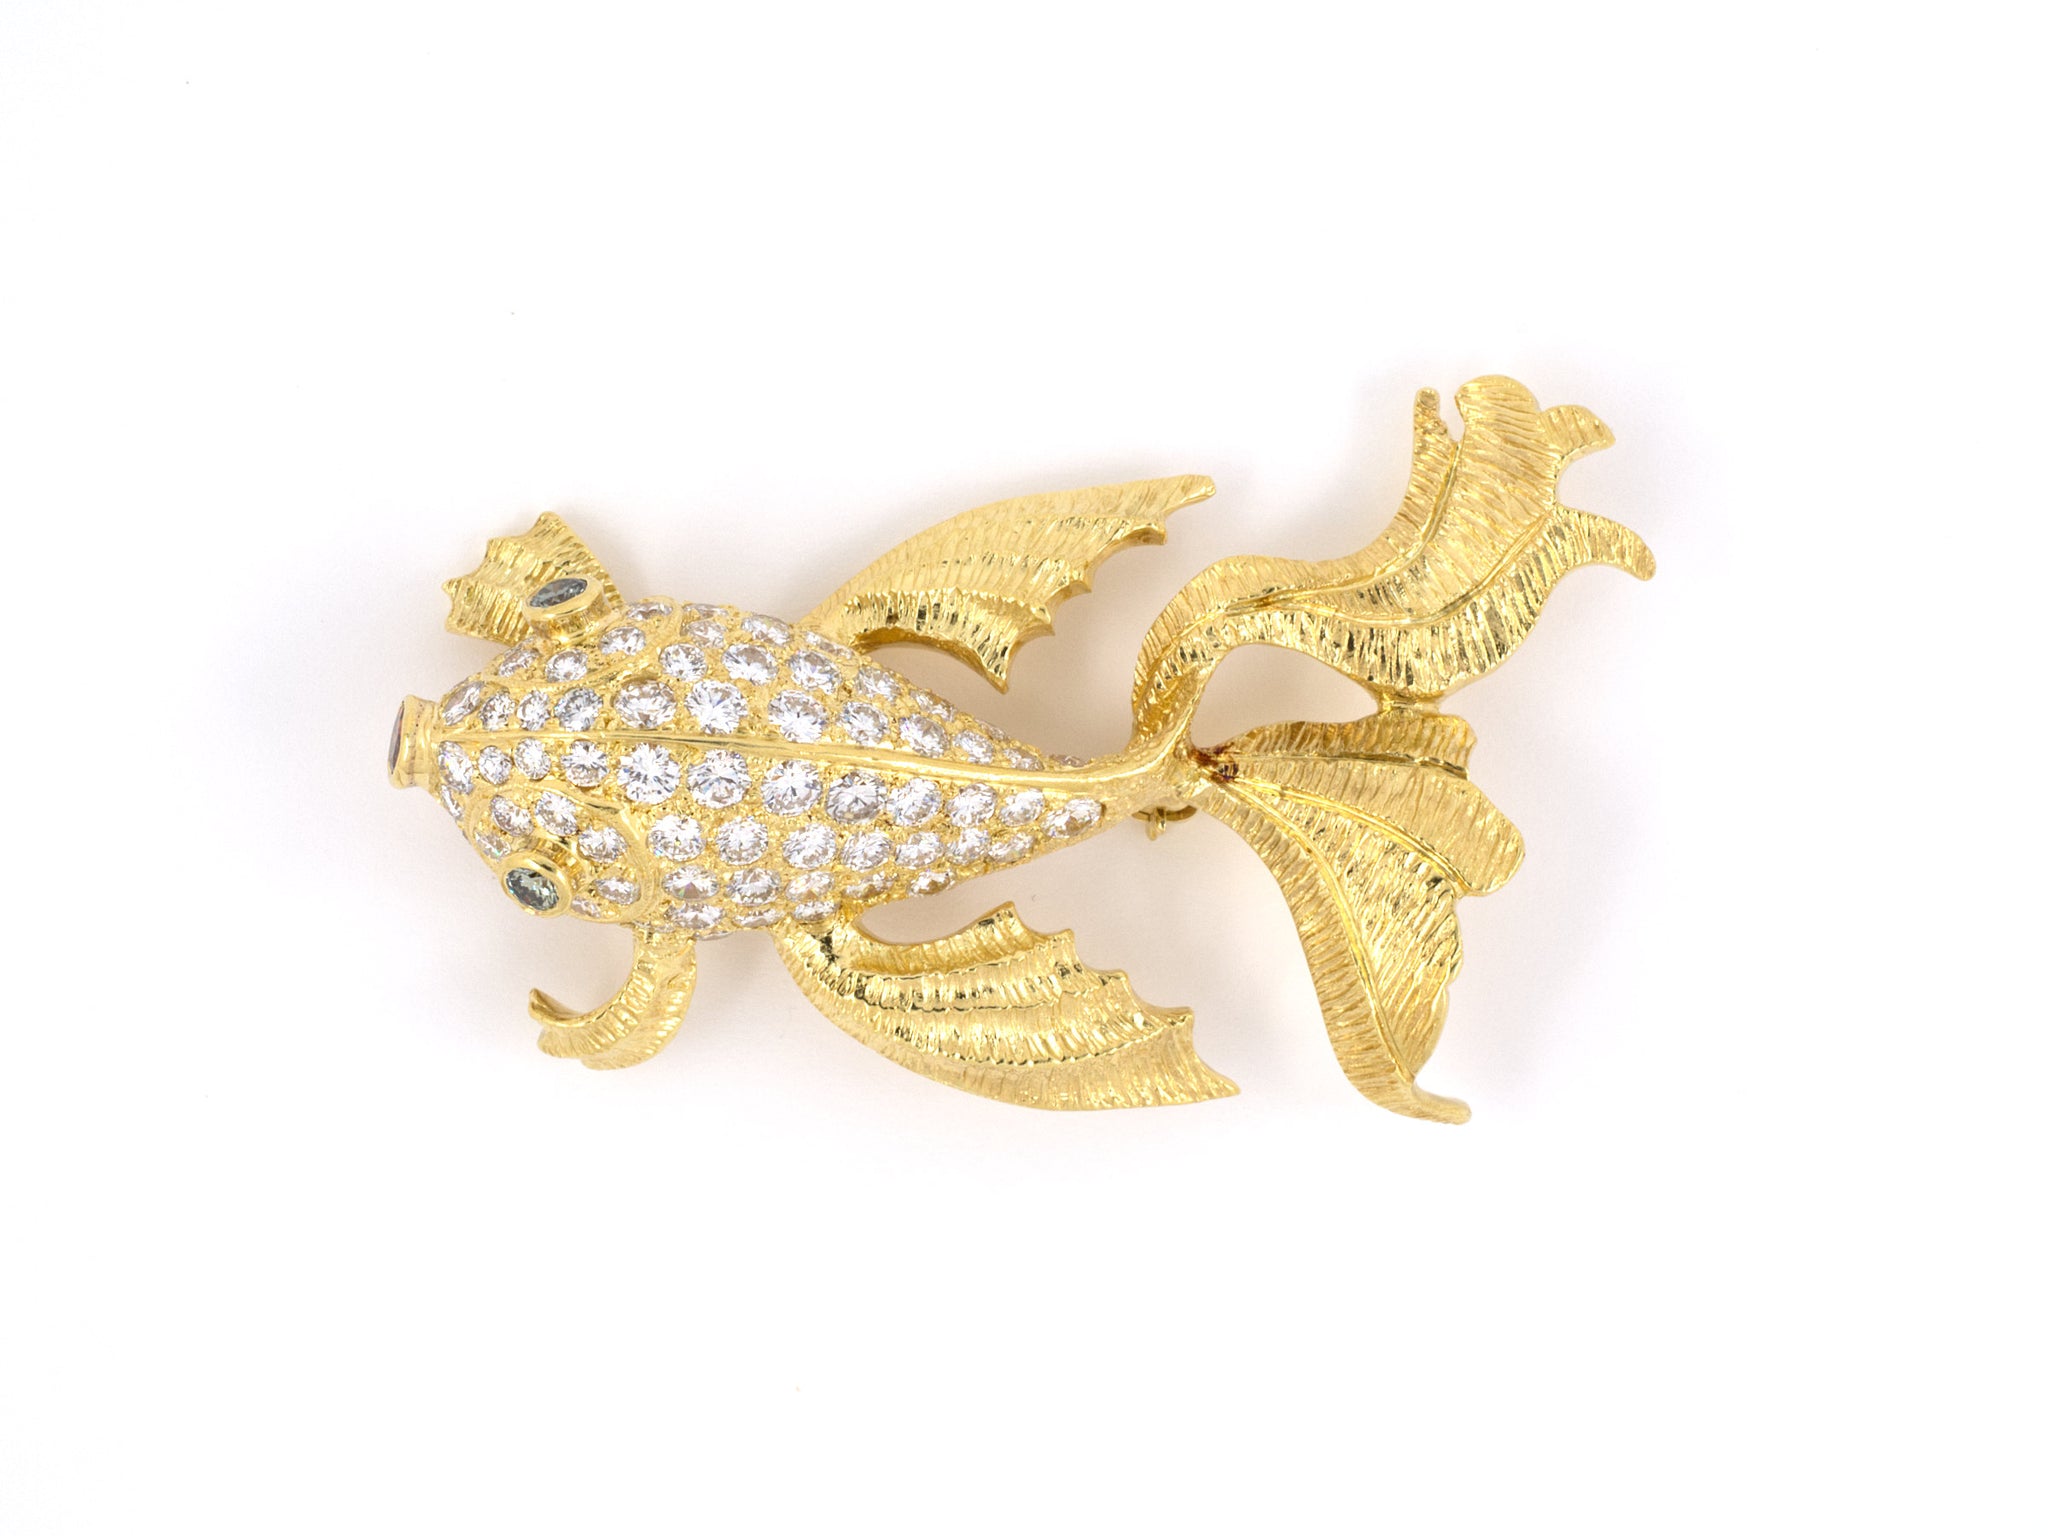 Pin on Golden Fishing